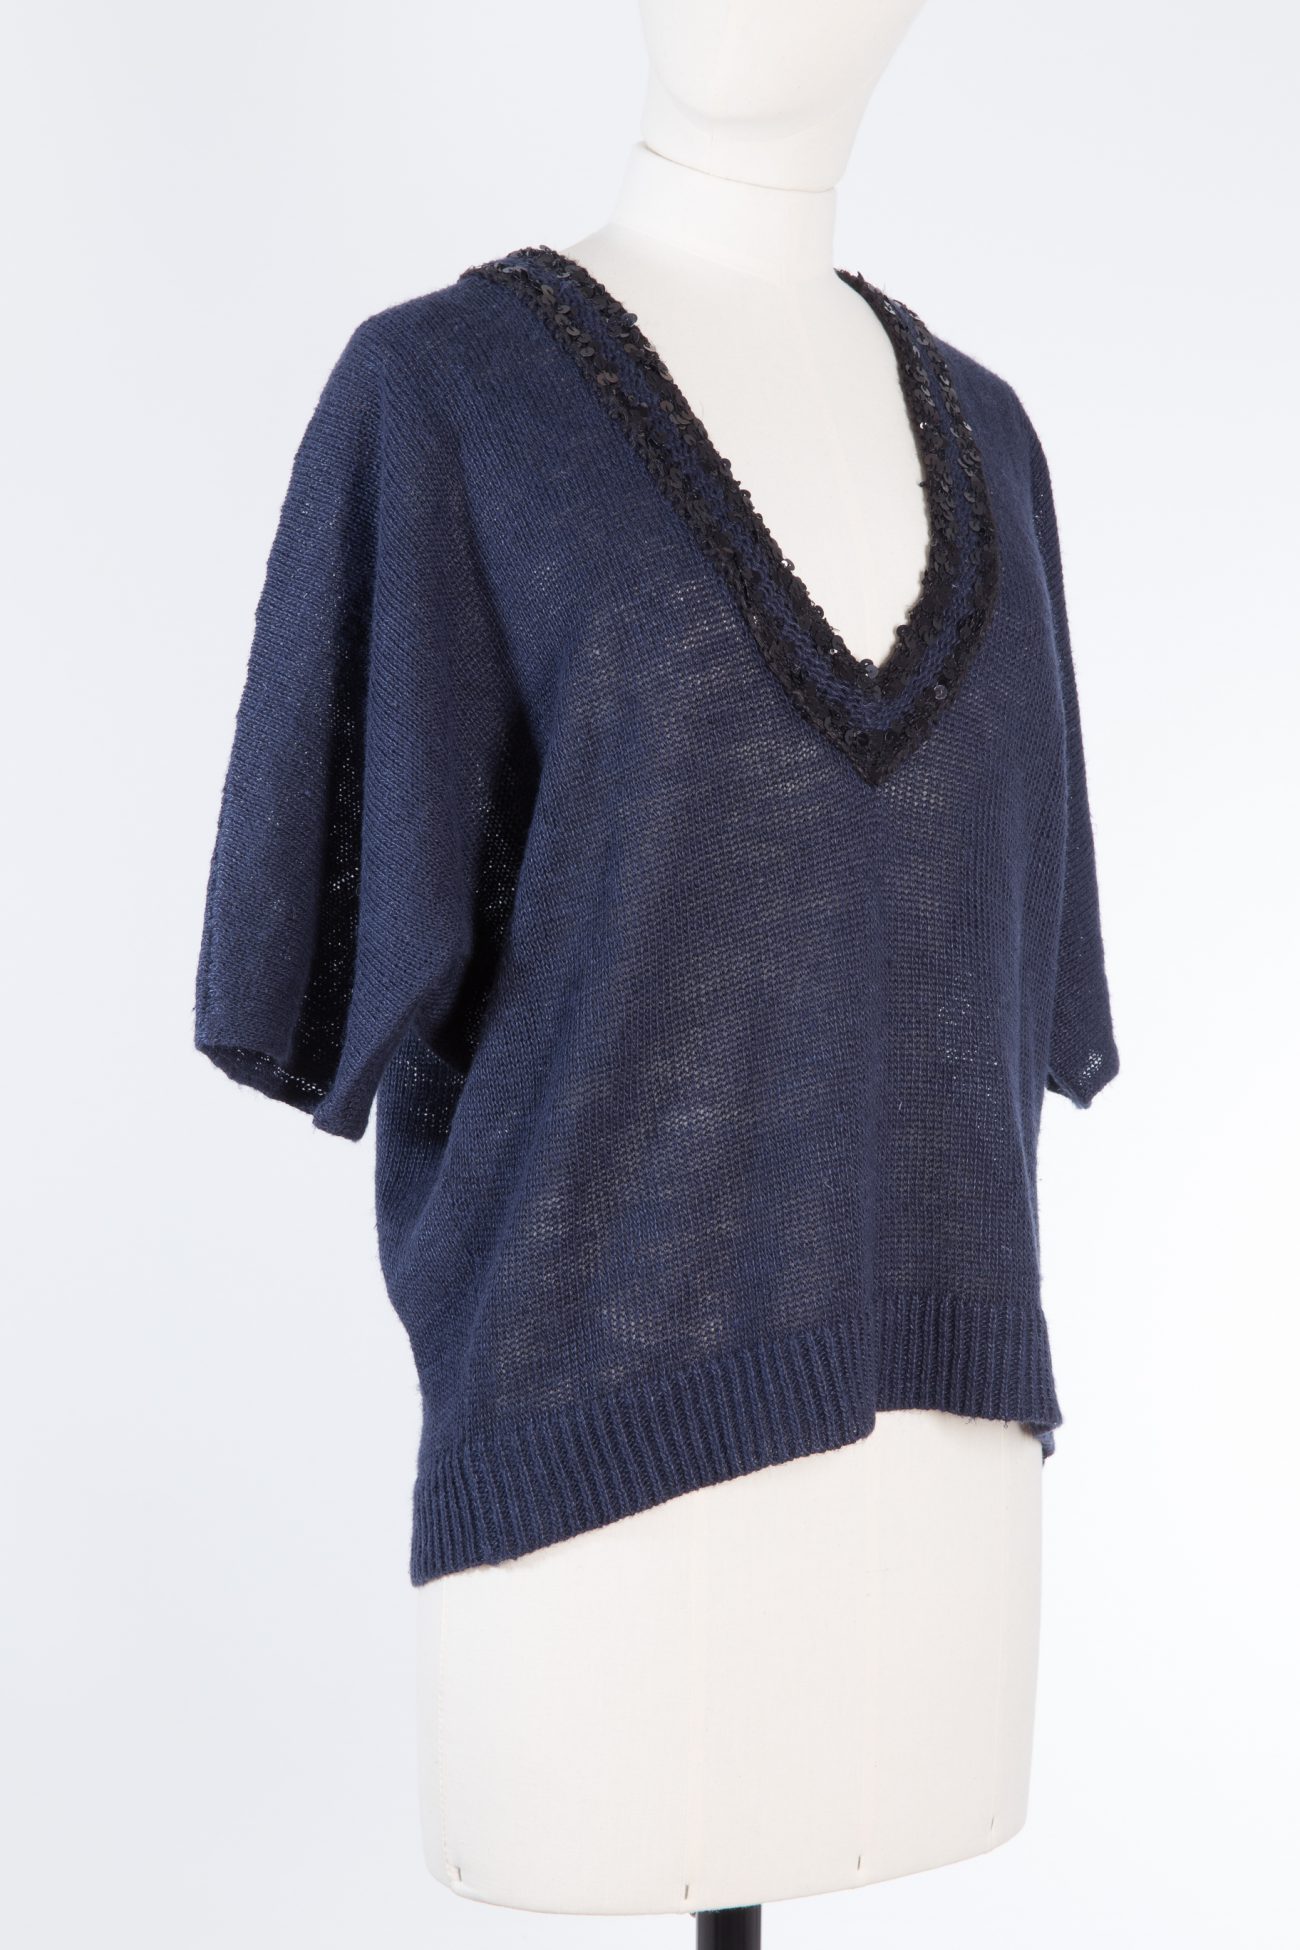 Brunello Cucinelli Sweater, S. Sequin embellished hemp sweater